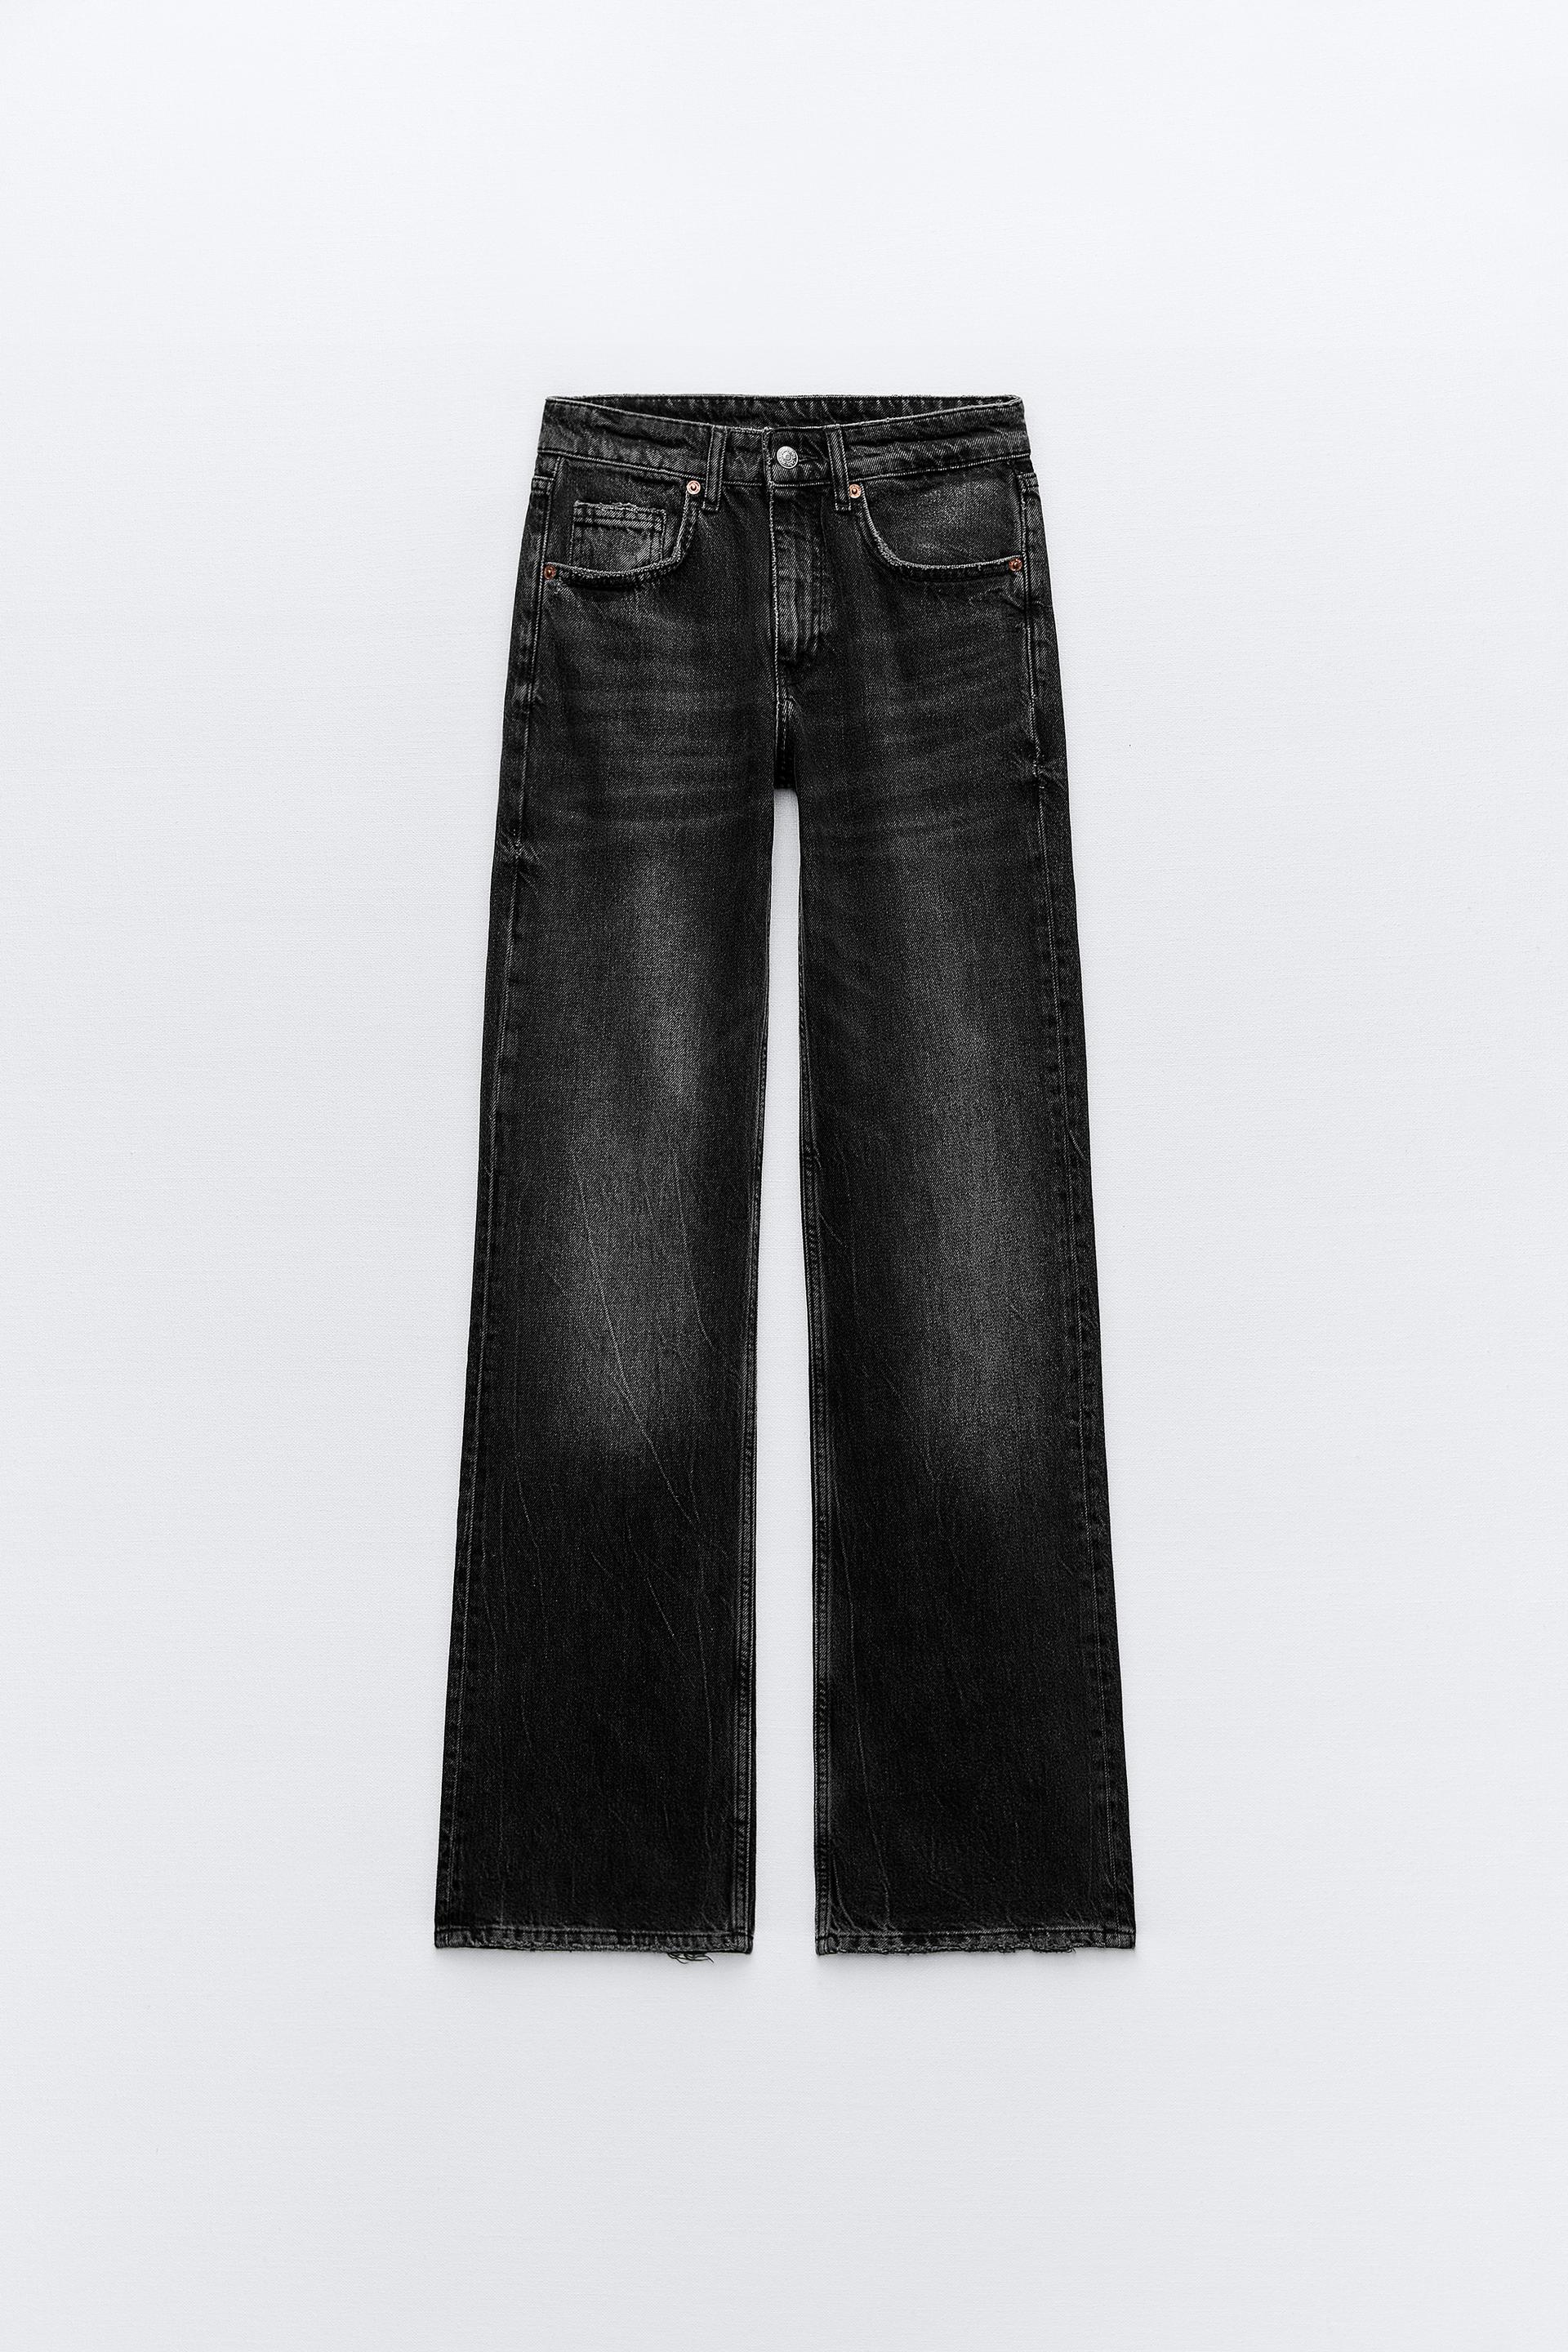 Джинсы Zara Trf Wide-leg Full Length, черный джинсы zara trf high rise wide leg темно синий